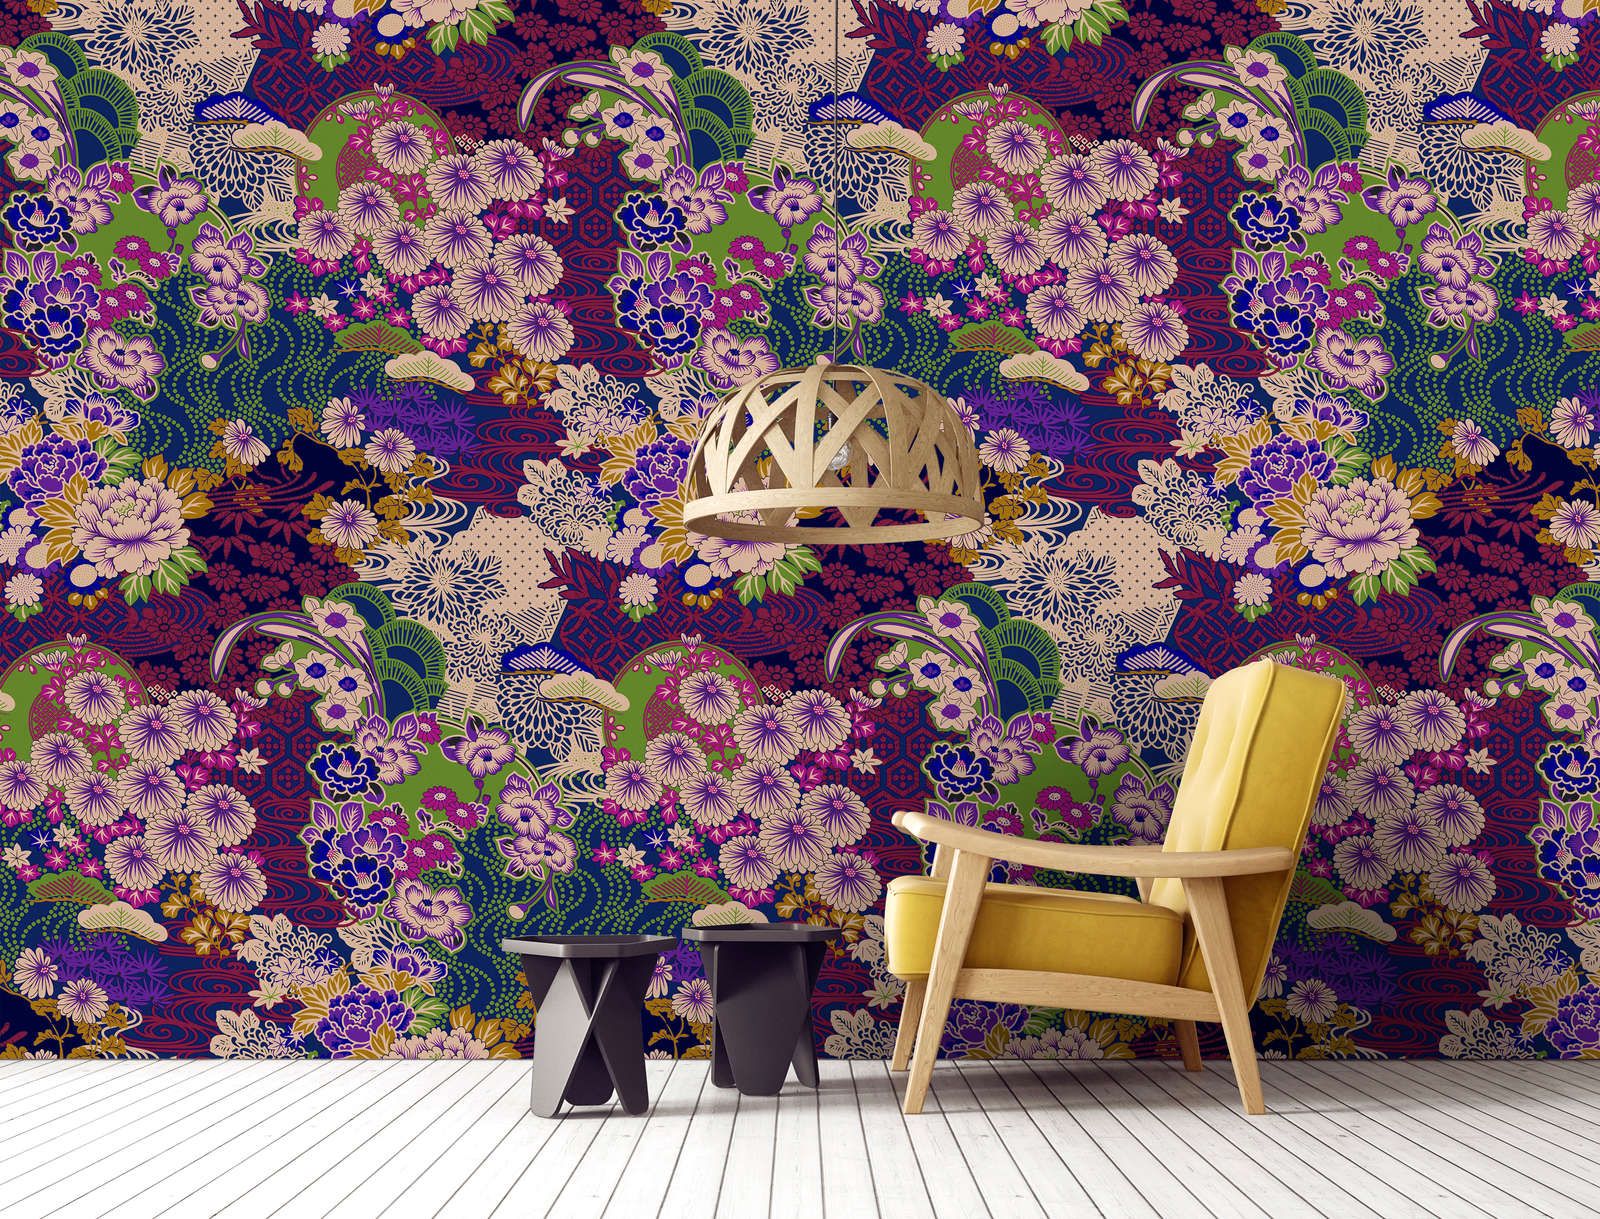             Photo wallpaper »kimo 2« - Abstract flower artwork - Purple, Green | Light textured non-woven
        